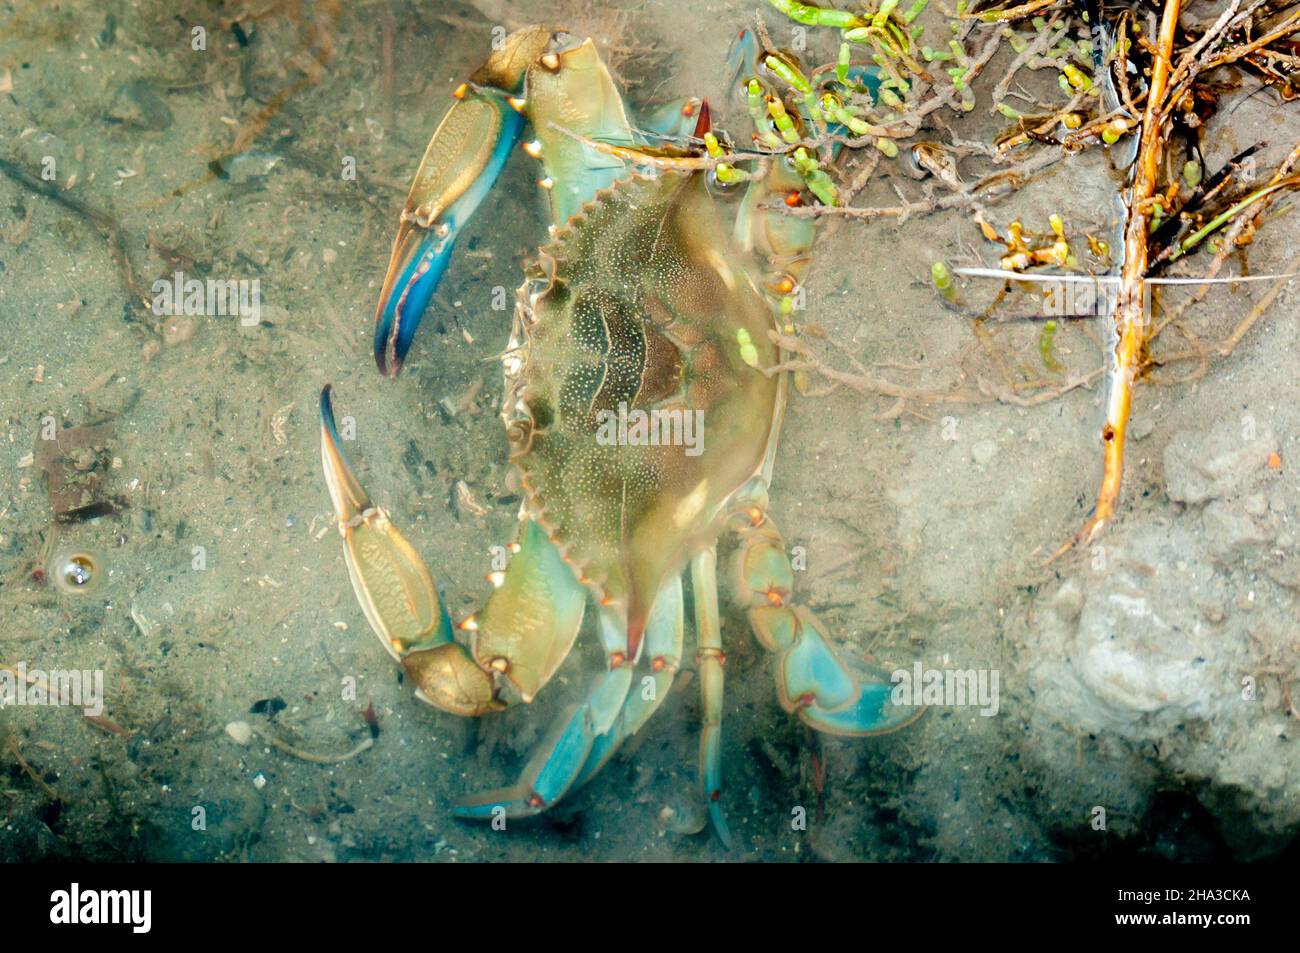 Atlantic blue crab underwater in a river in Spain Stock Photo